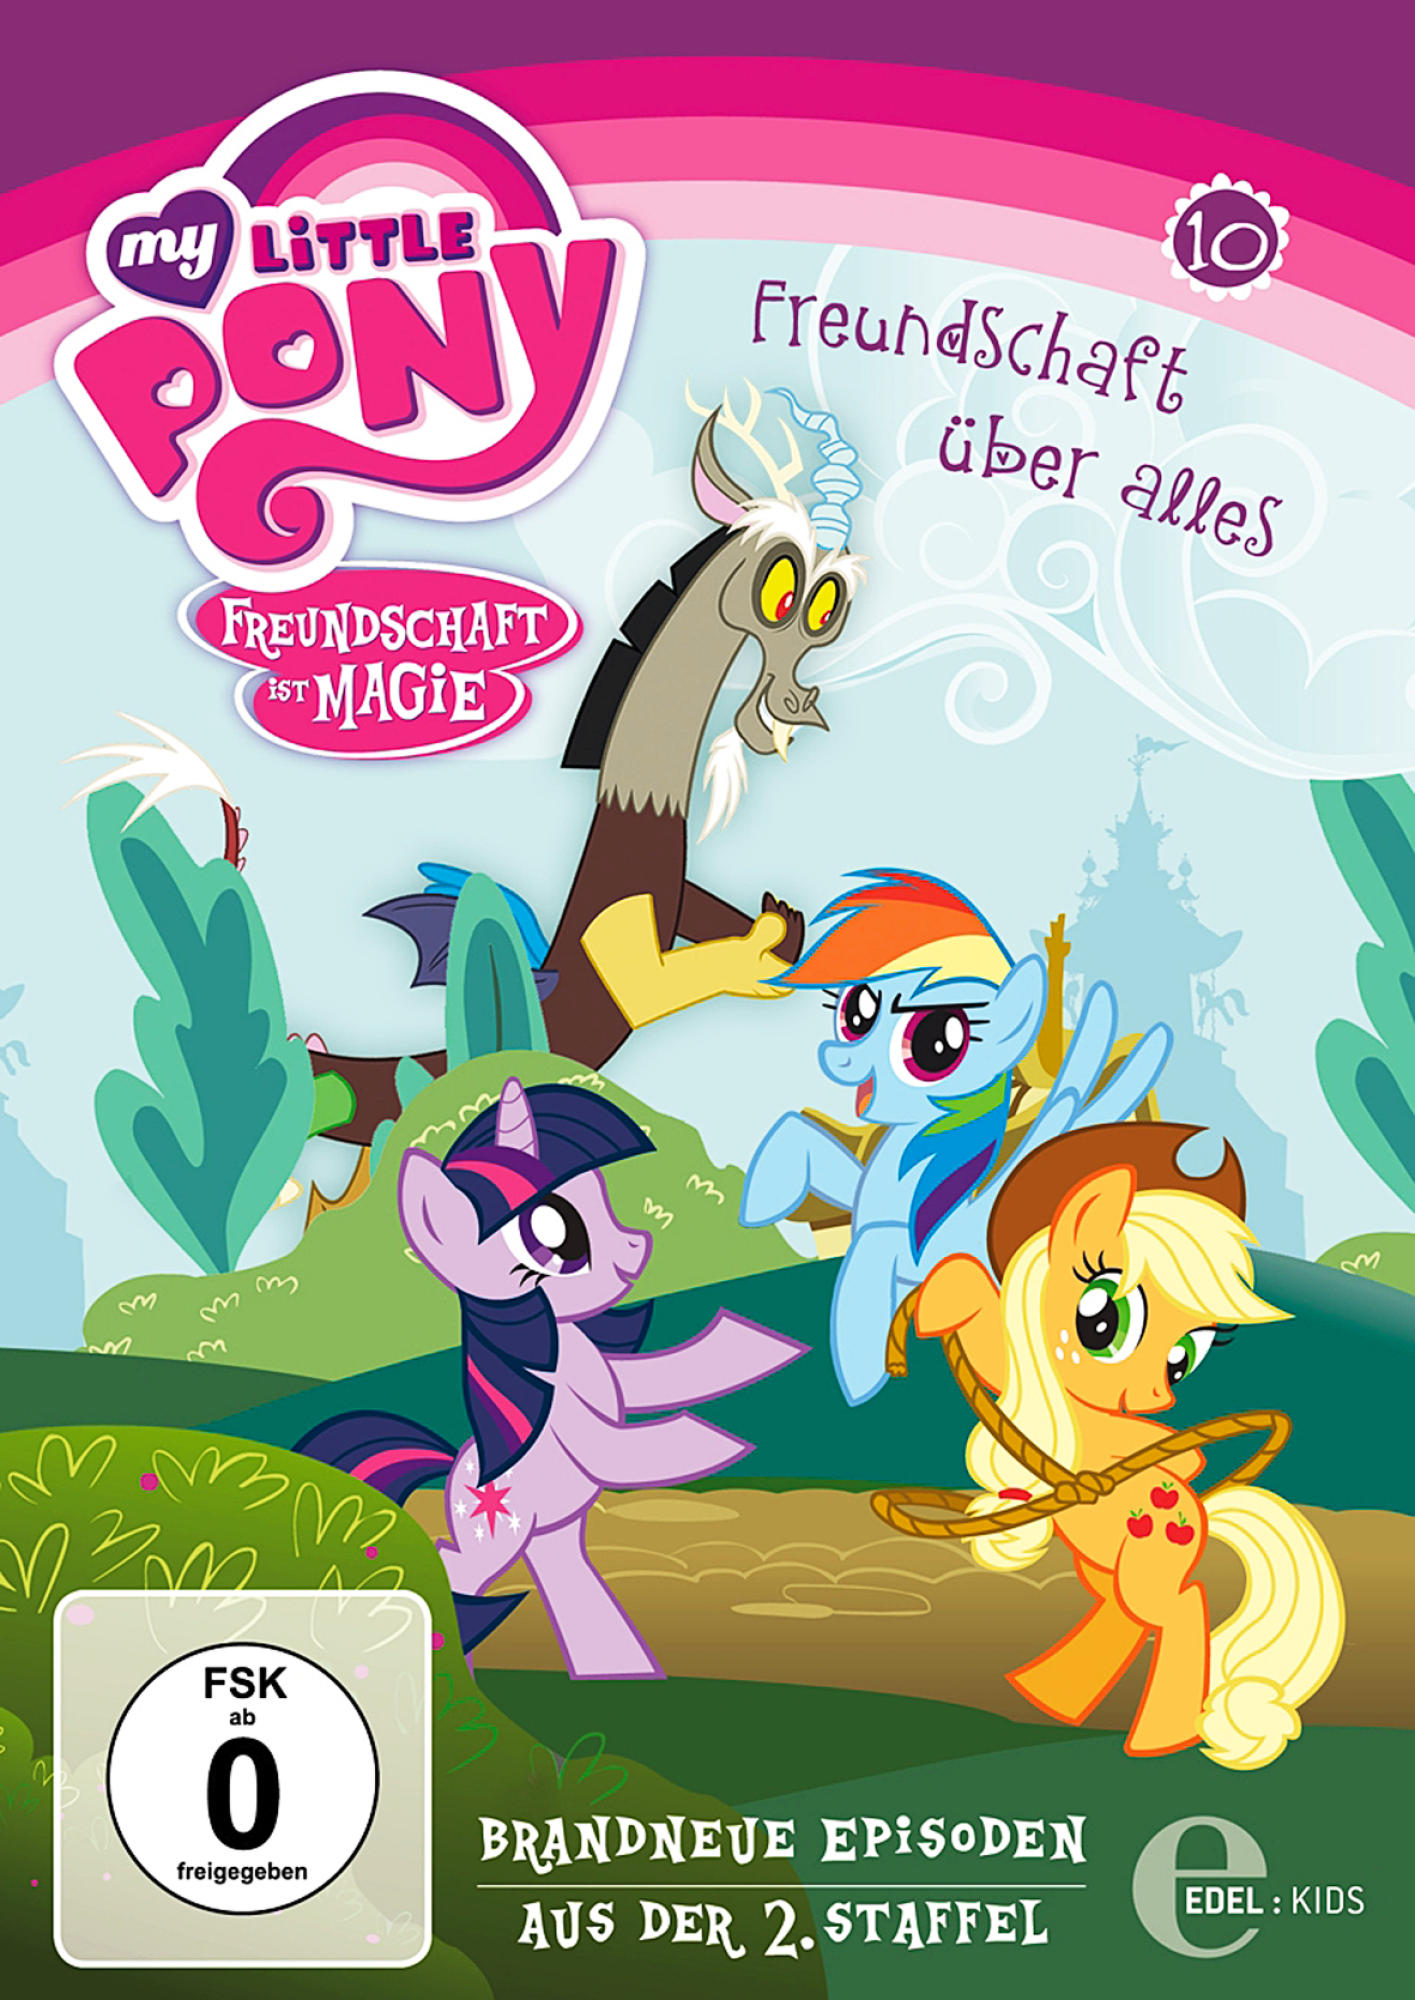 010 - Pony alles Freundschaft über Little DVD My 